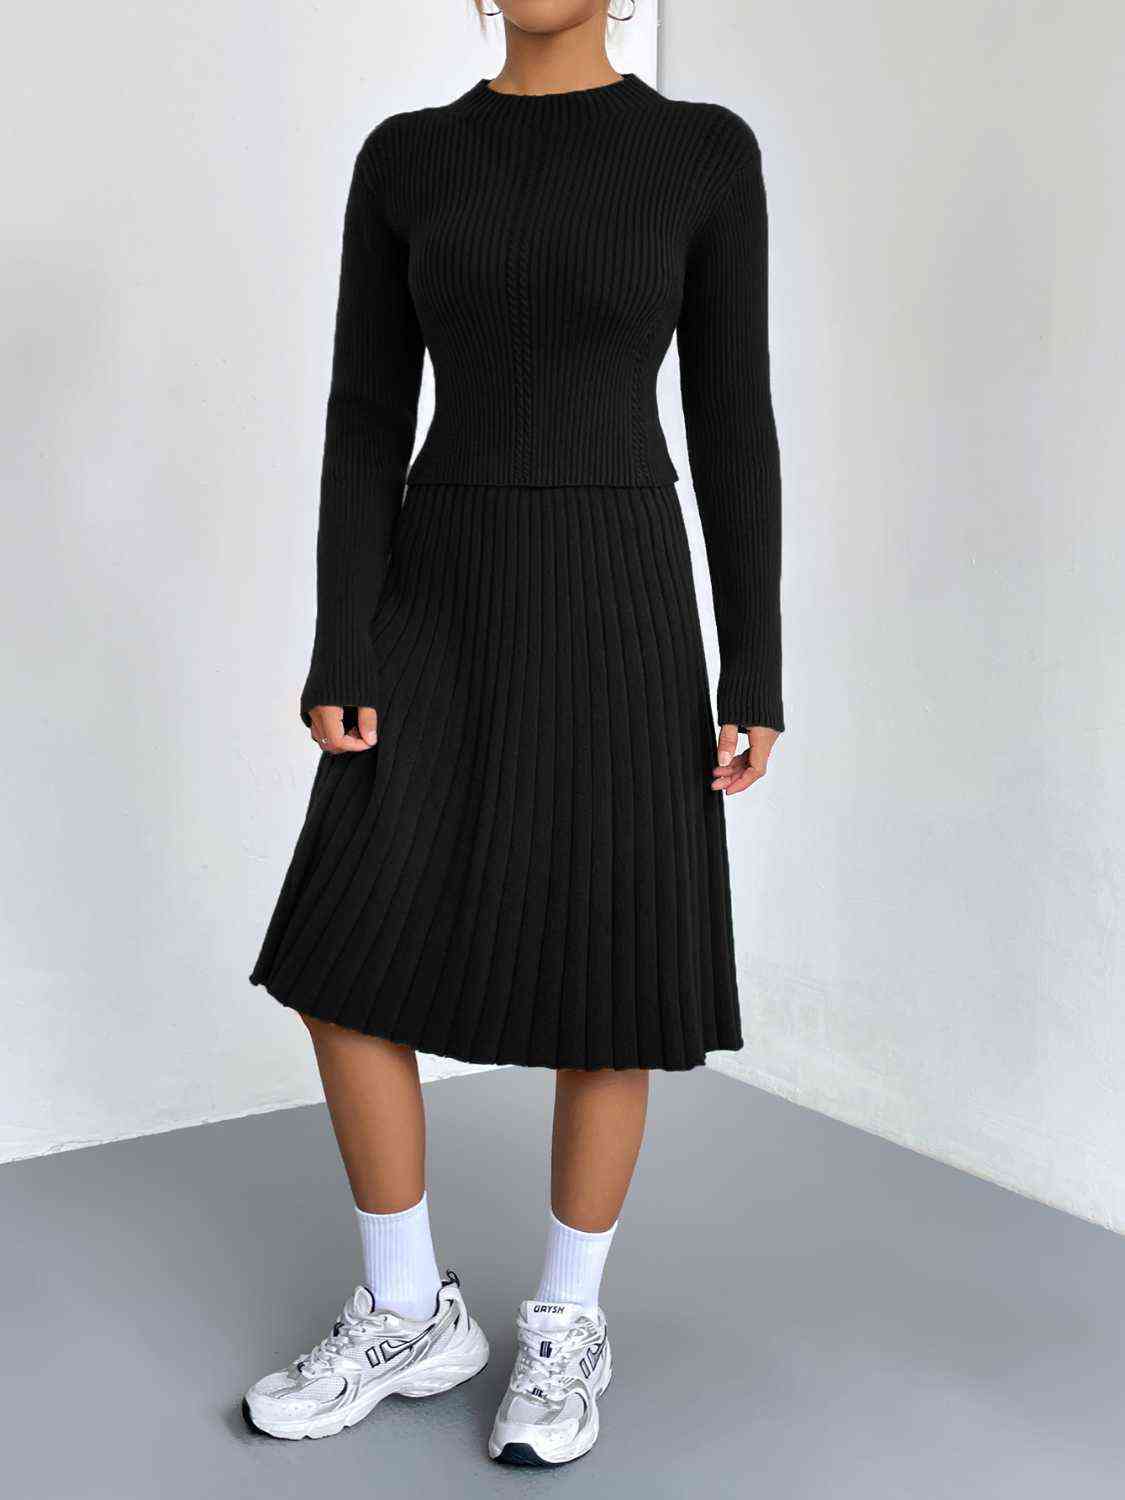 Women's Rib-Knit Sweater and Skirt Set Black